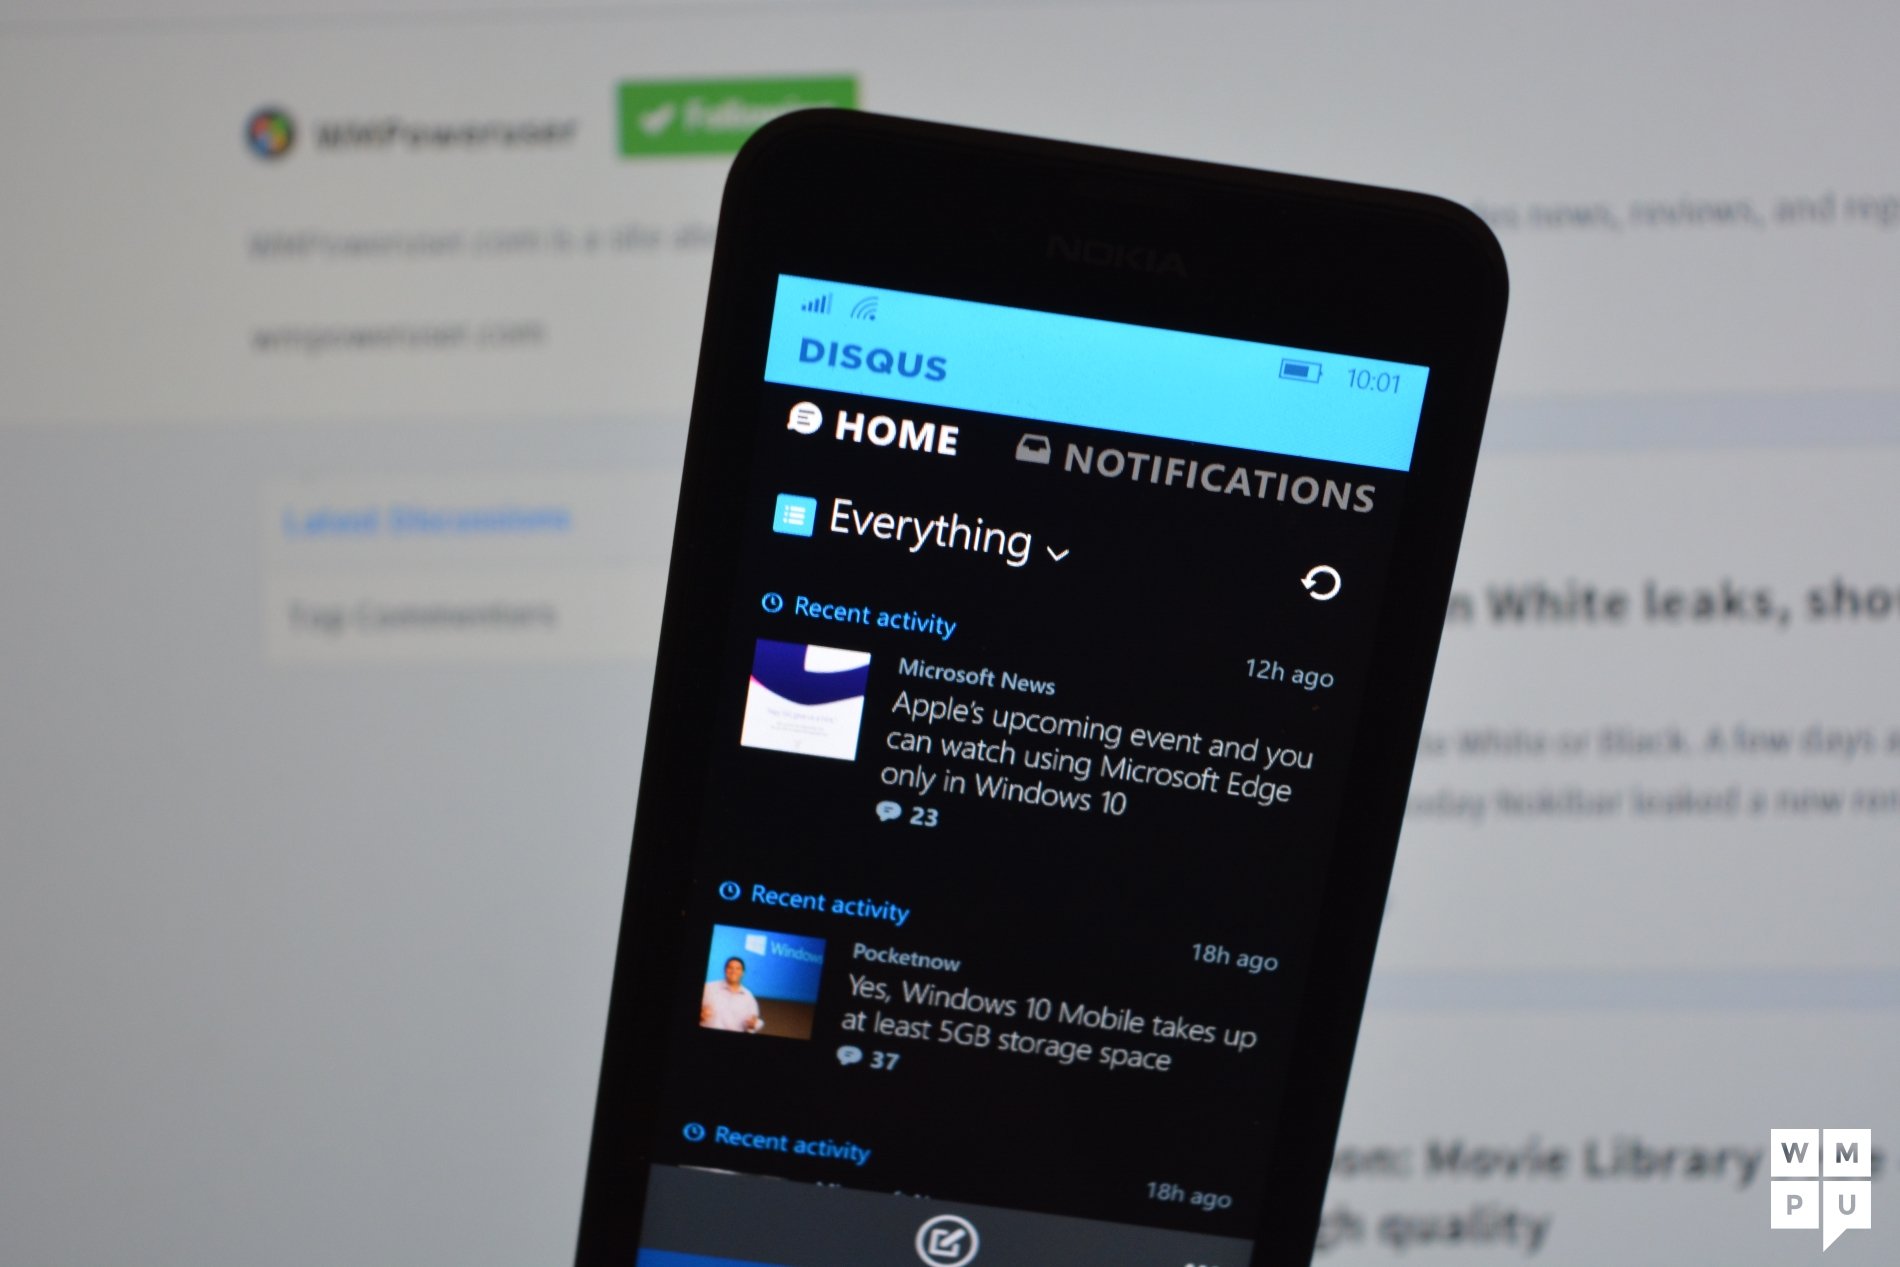 Disqus introduces its new Windows Phone app, Windows 10 app coming soon